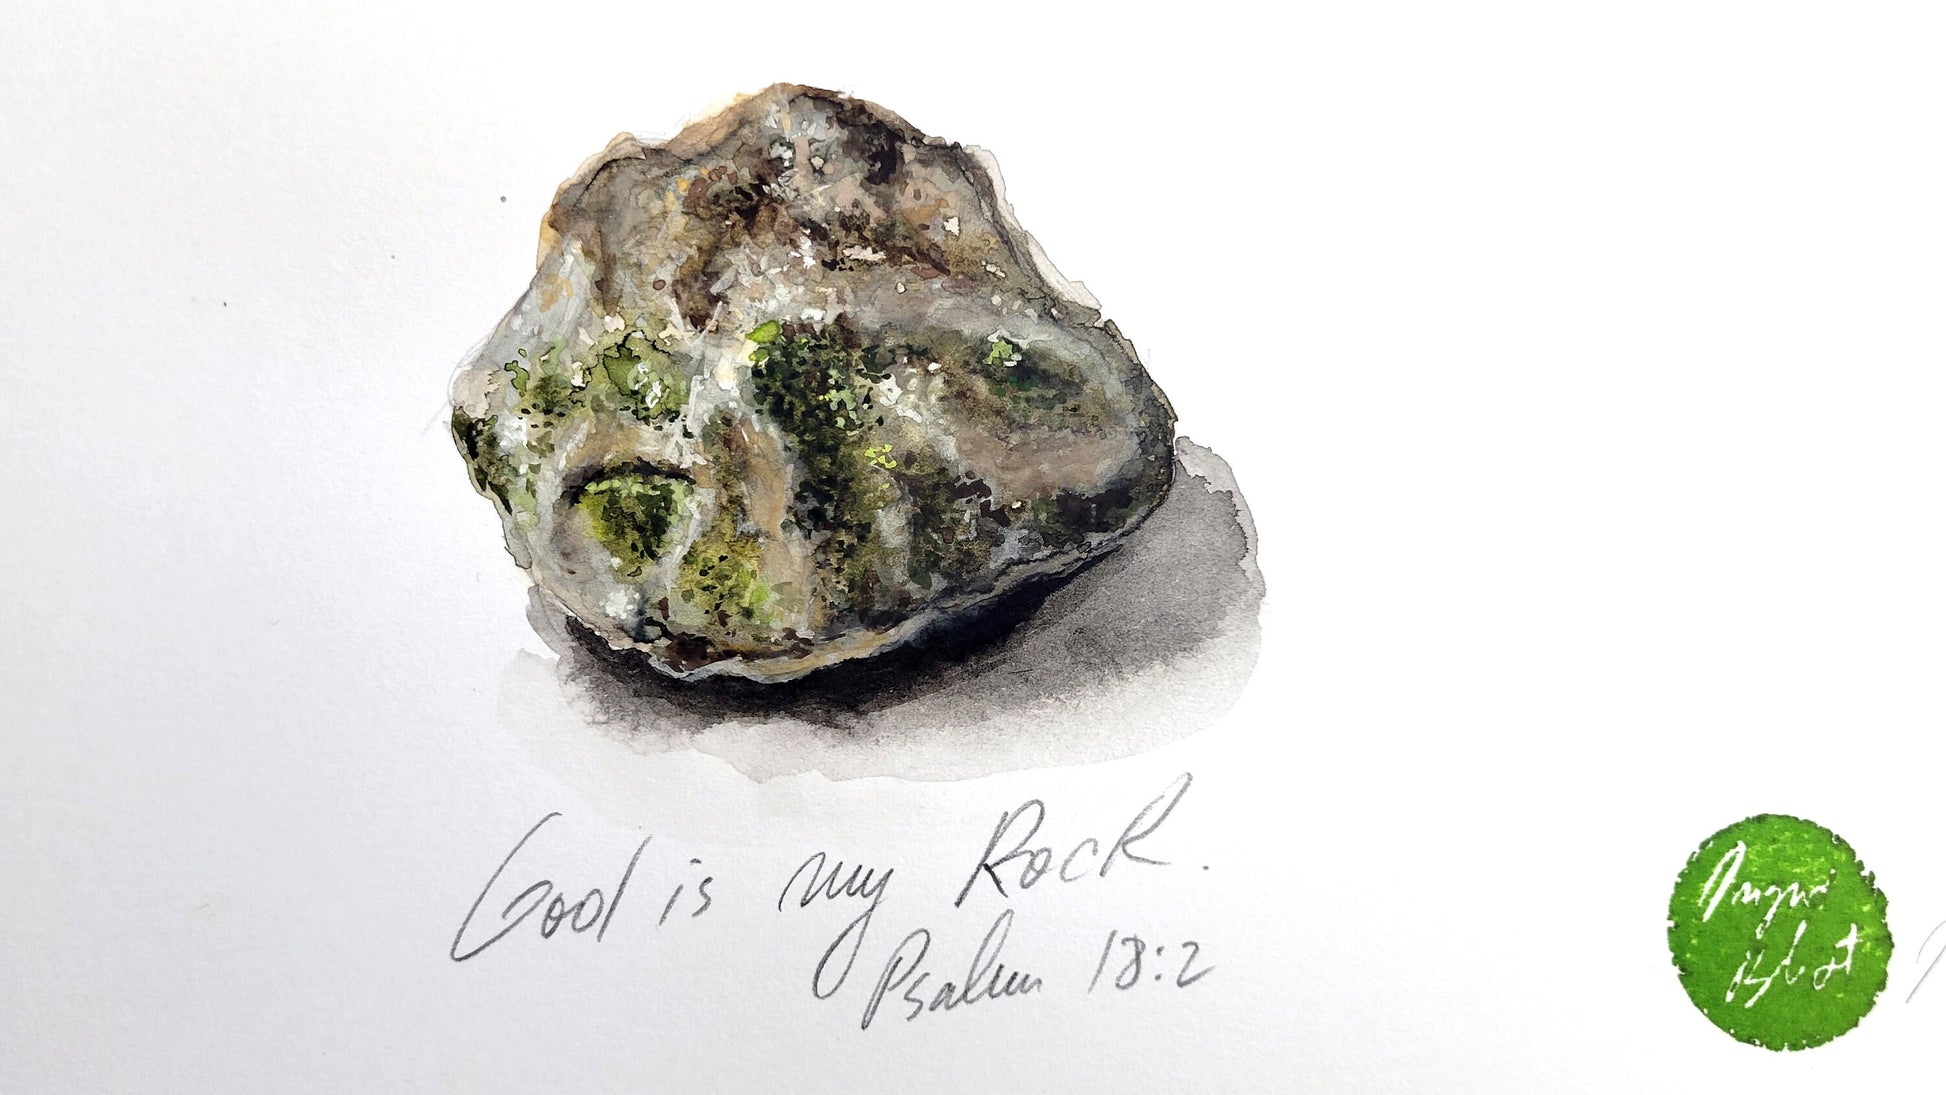 God is my Rock - original watercolor painting